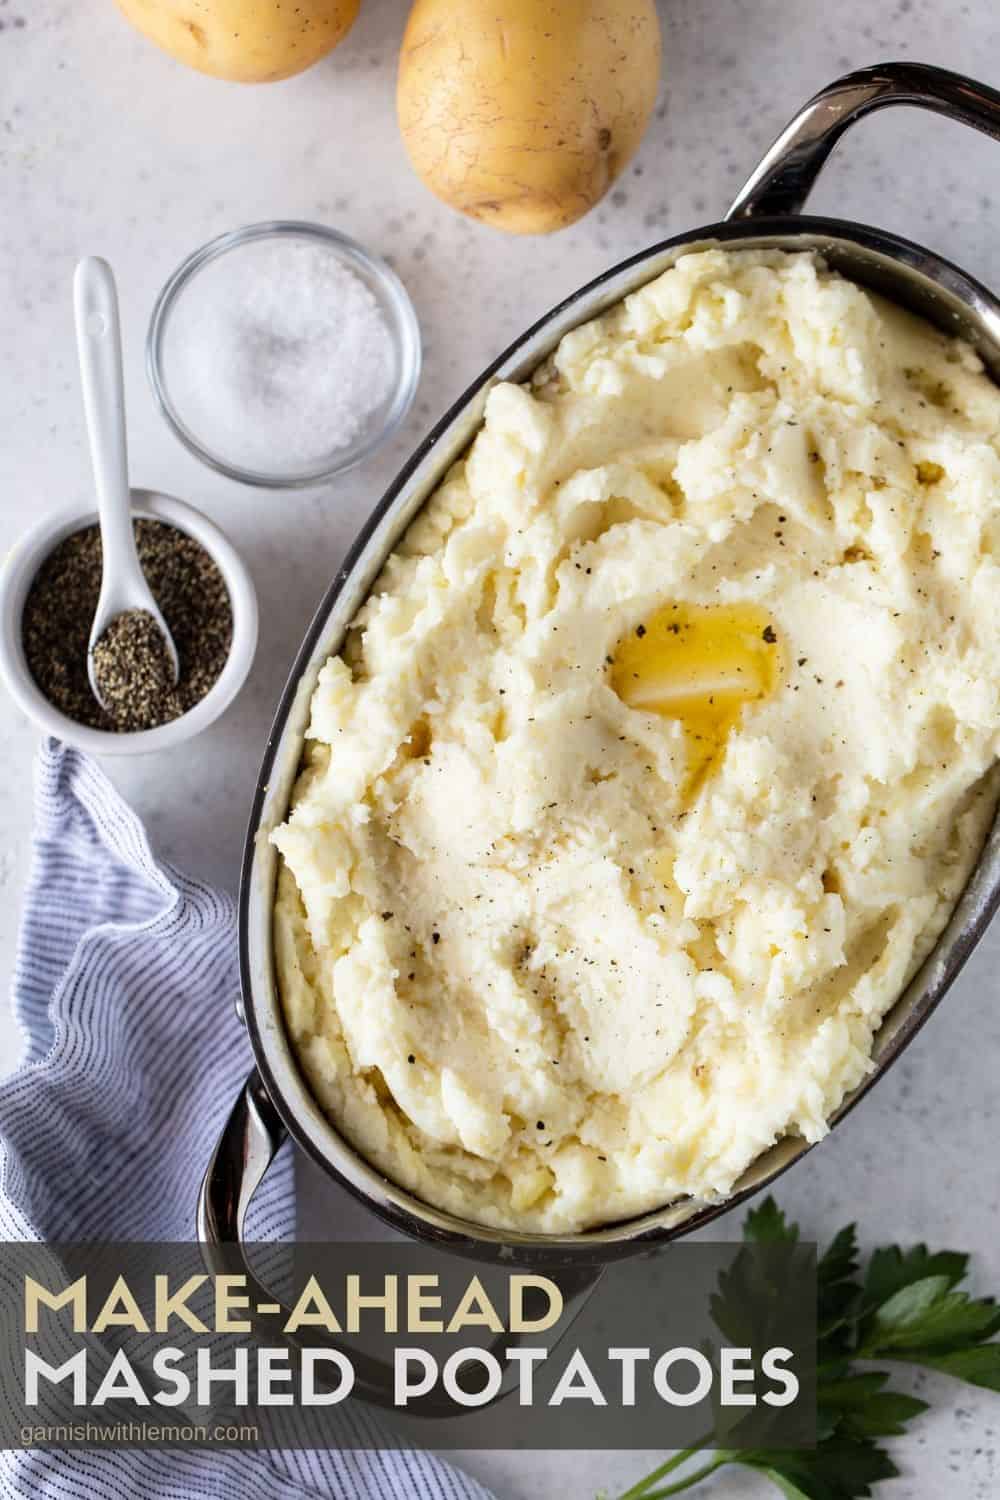 The BEST Make-Ahead Mashed Potatoes - Garnish with Lemon